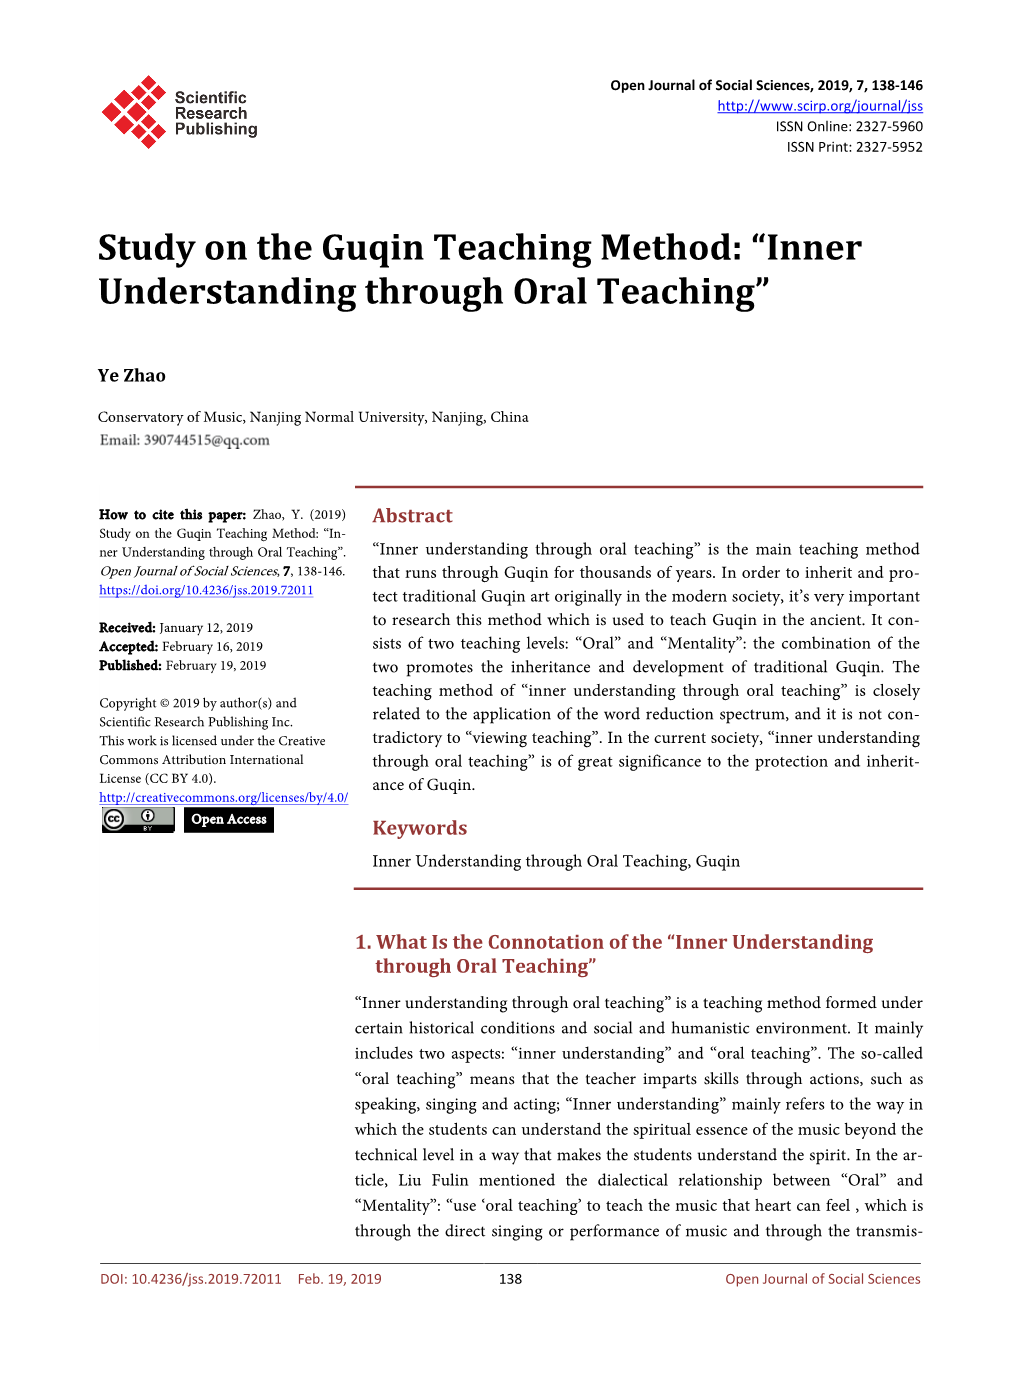 Study on the Guqin Teaching Method: “Inner Understanding Through Oral Teaching”